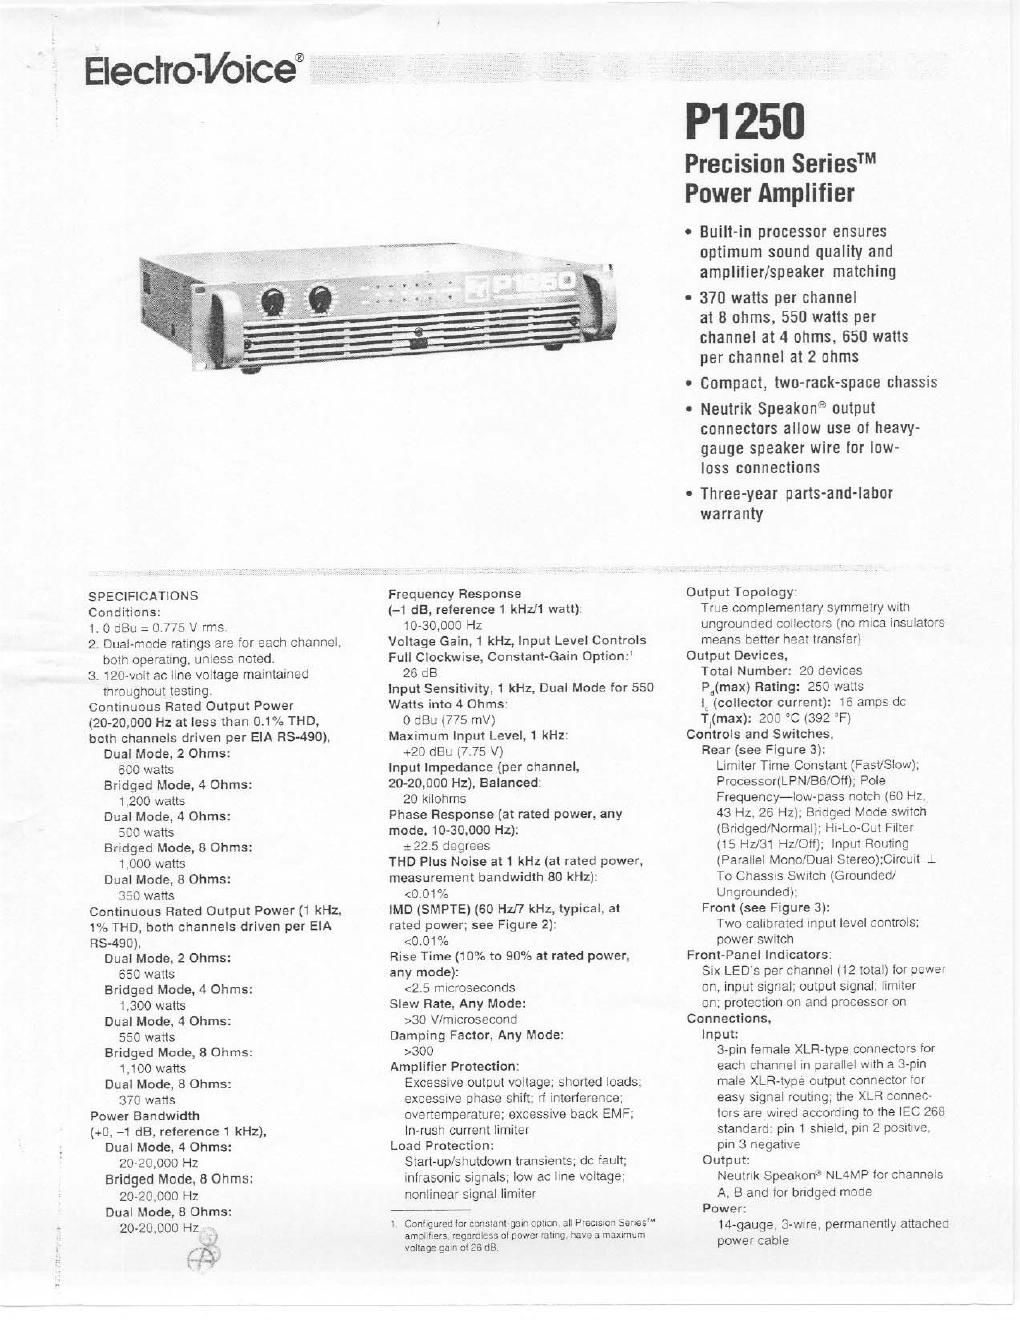 electro voice p 1250 brochure